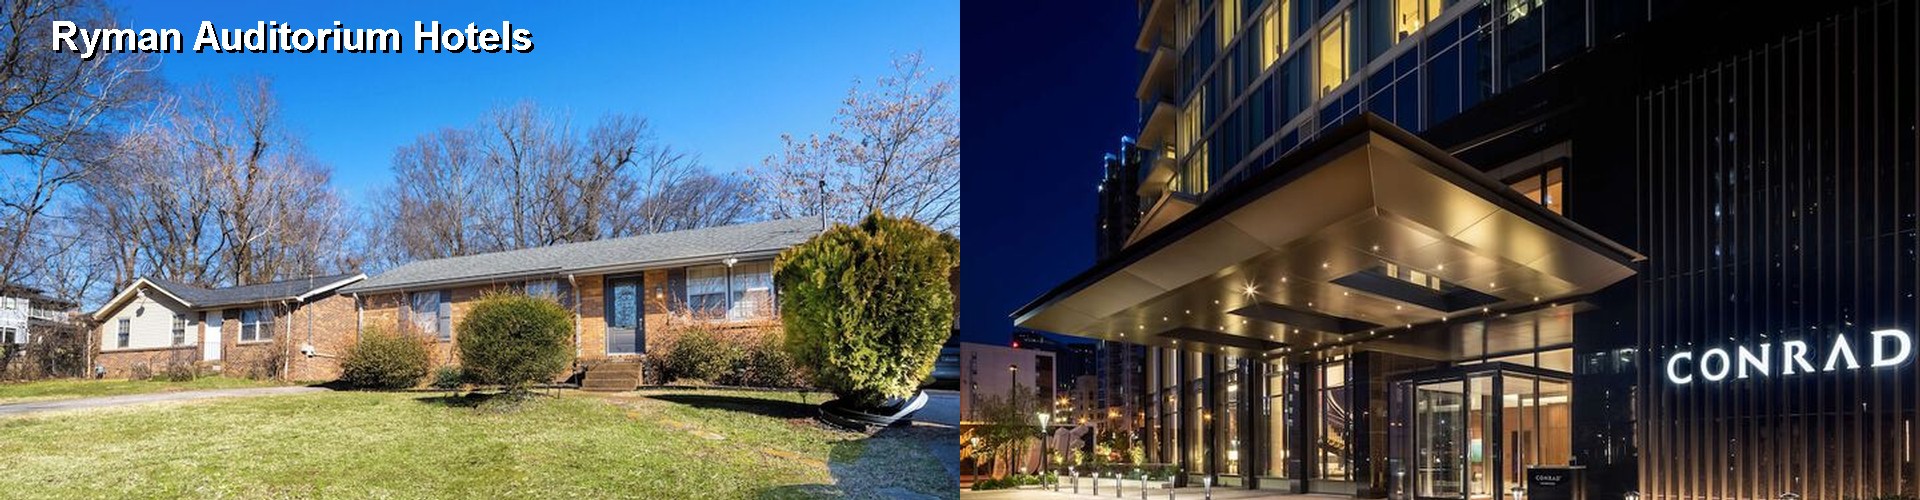 5 Best Hotels near Ryman Auditorium